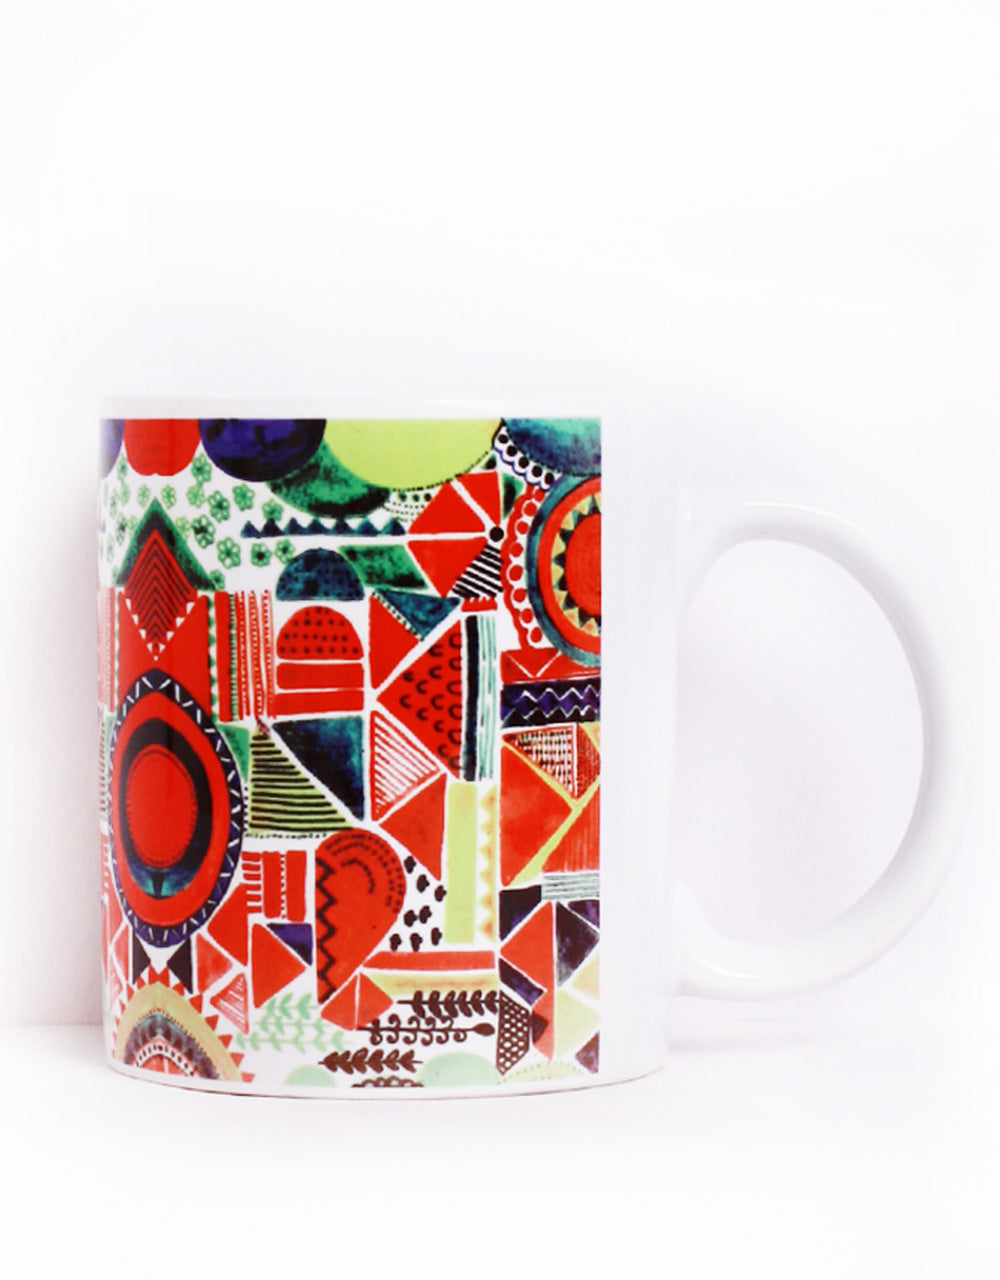 Geometric Coffee Mug